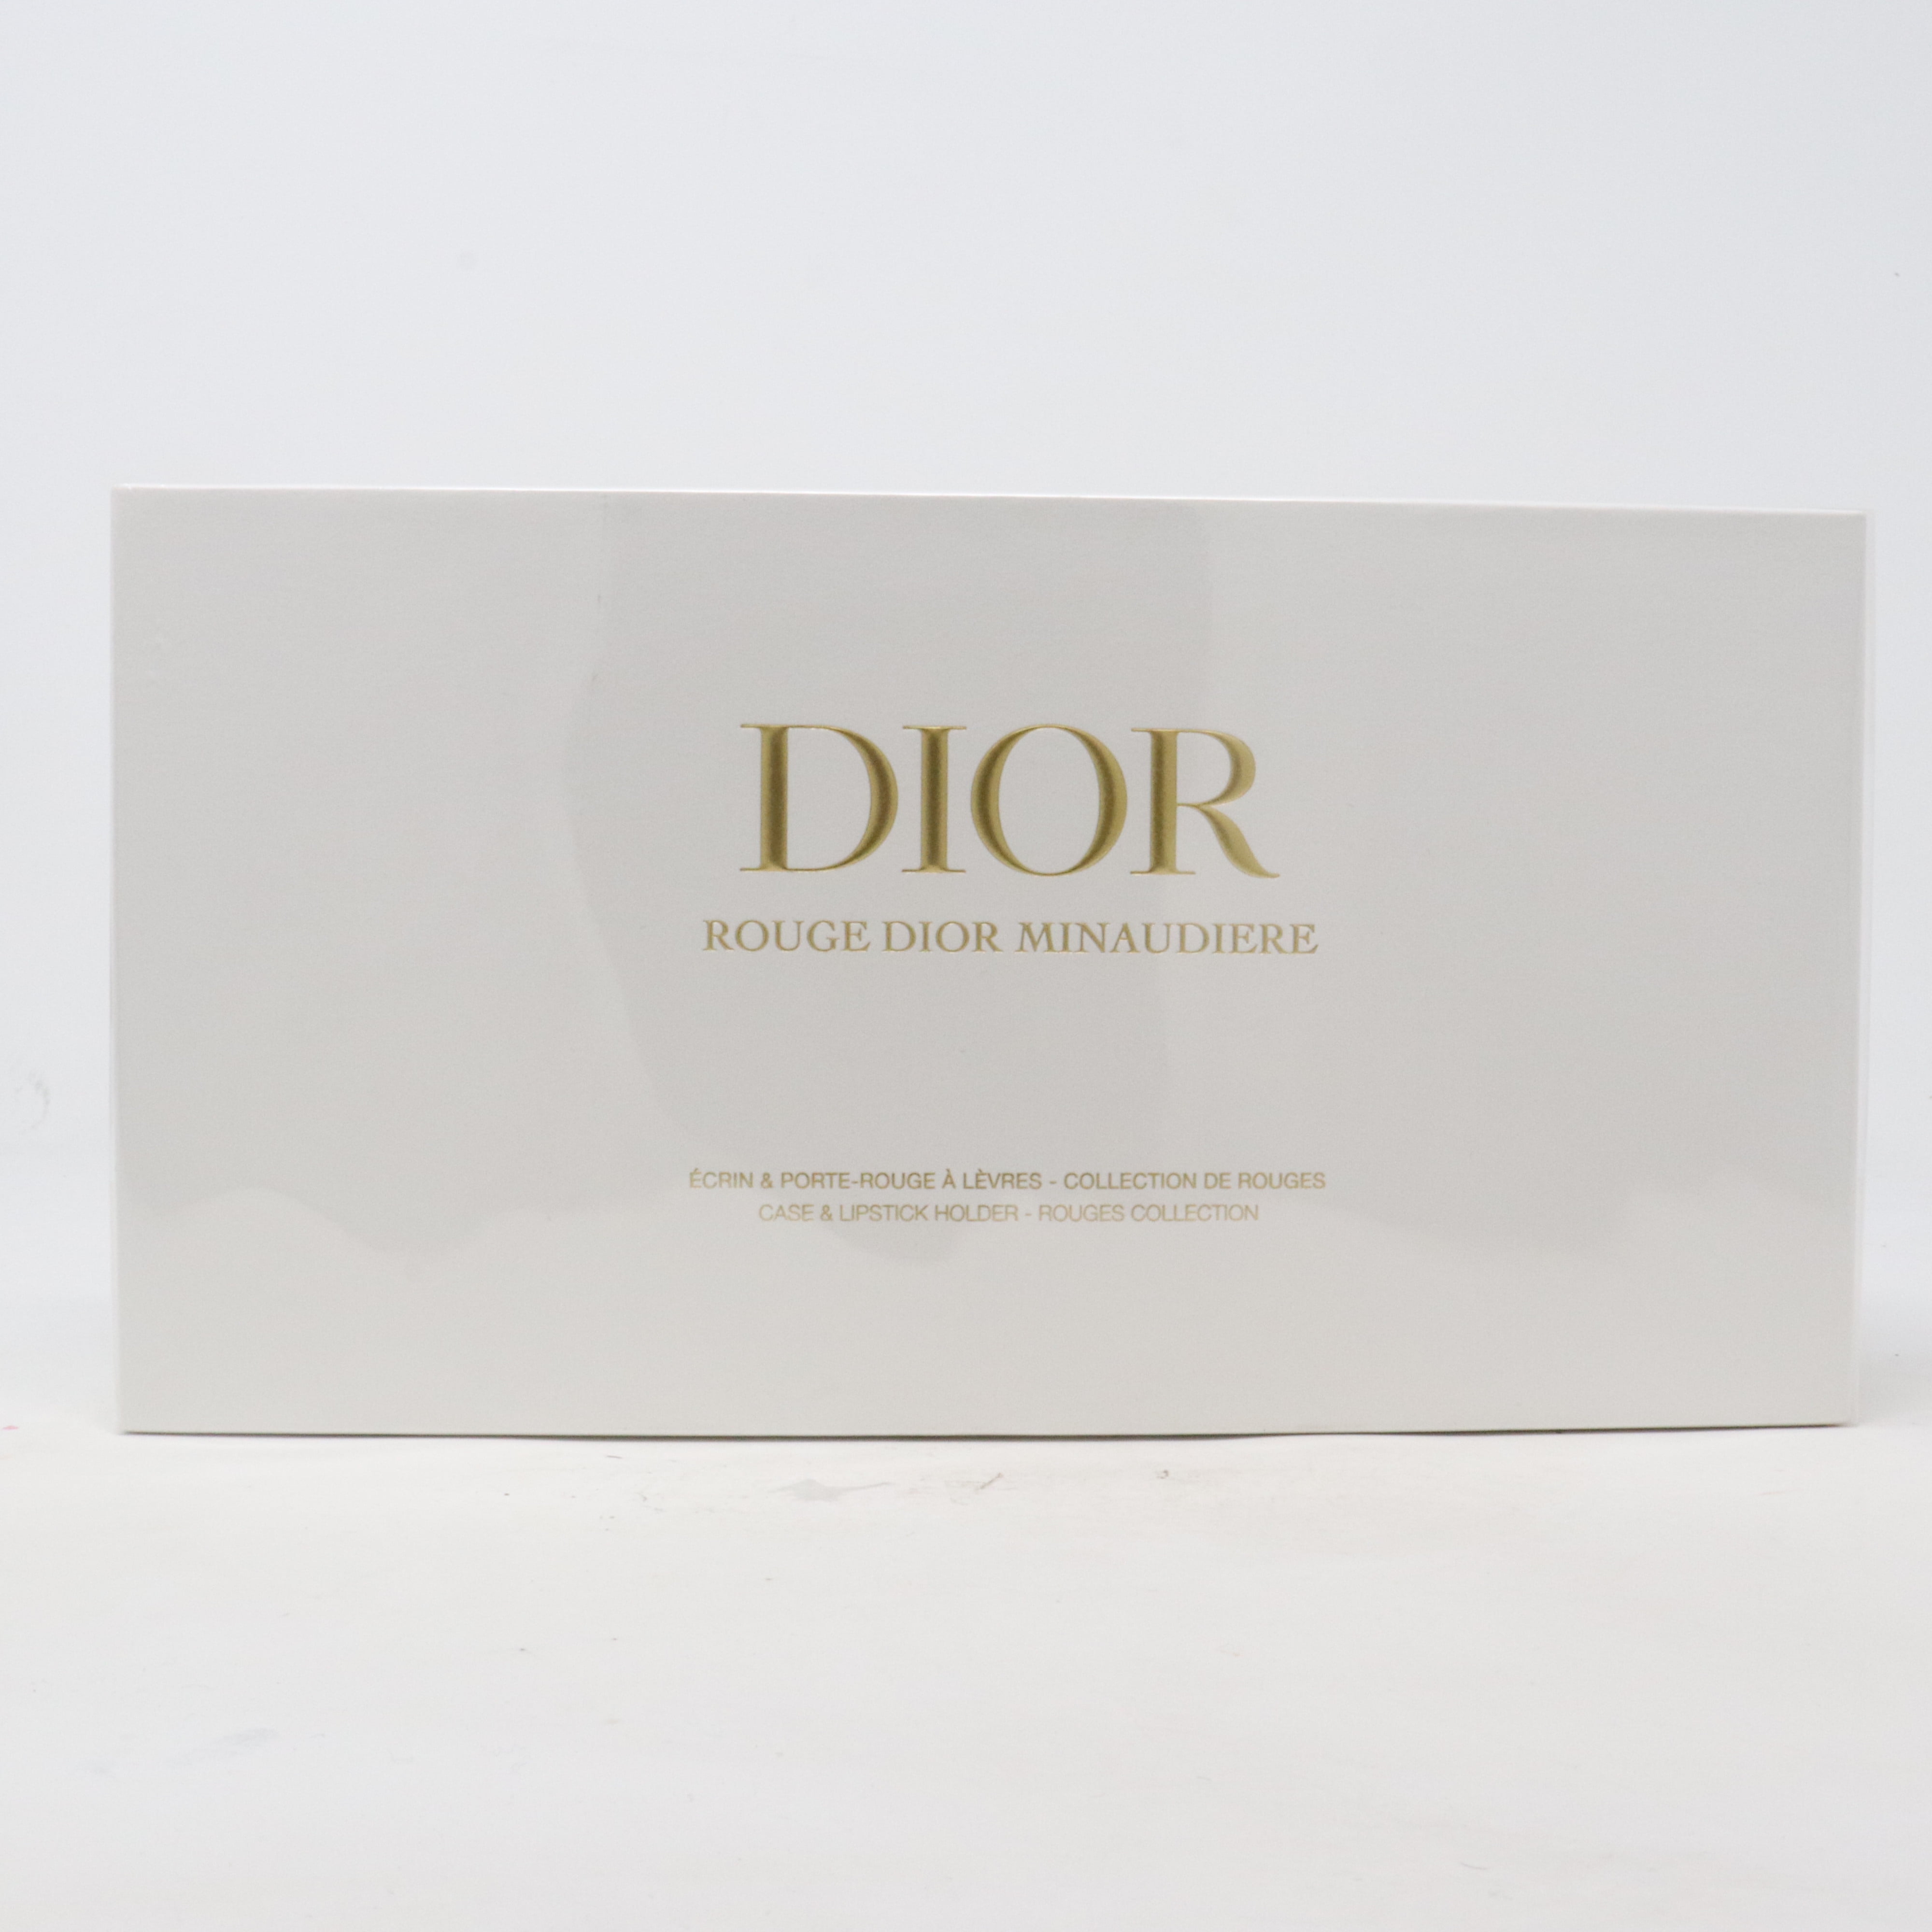 Dior Rouge Dior Minaudeire Lipstick Case & Refill Set / New With Box 